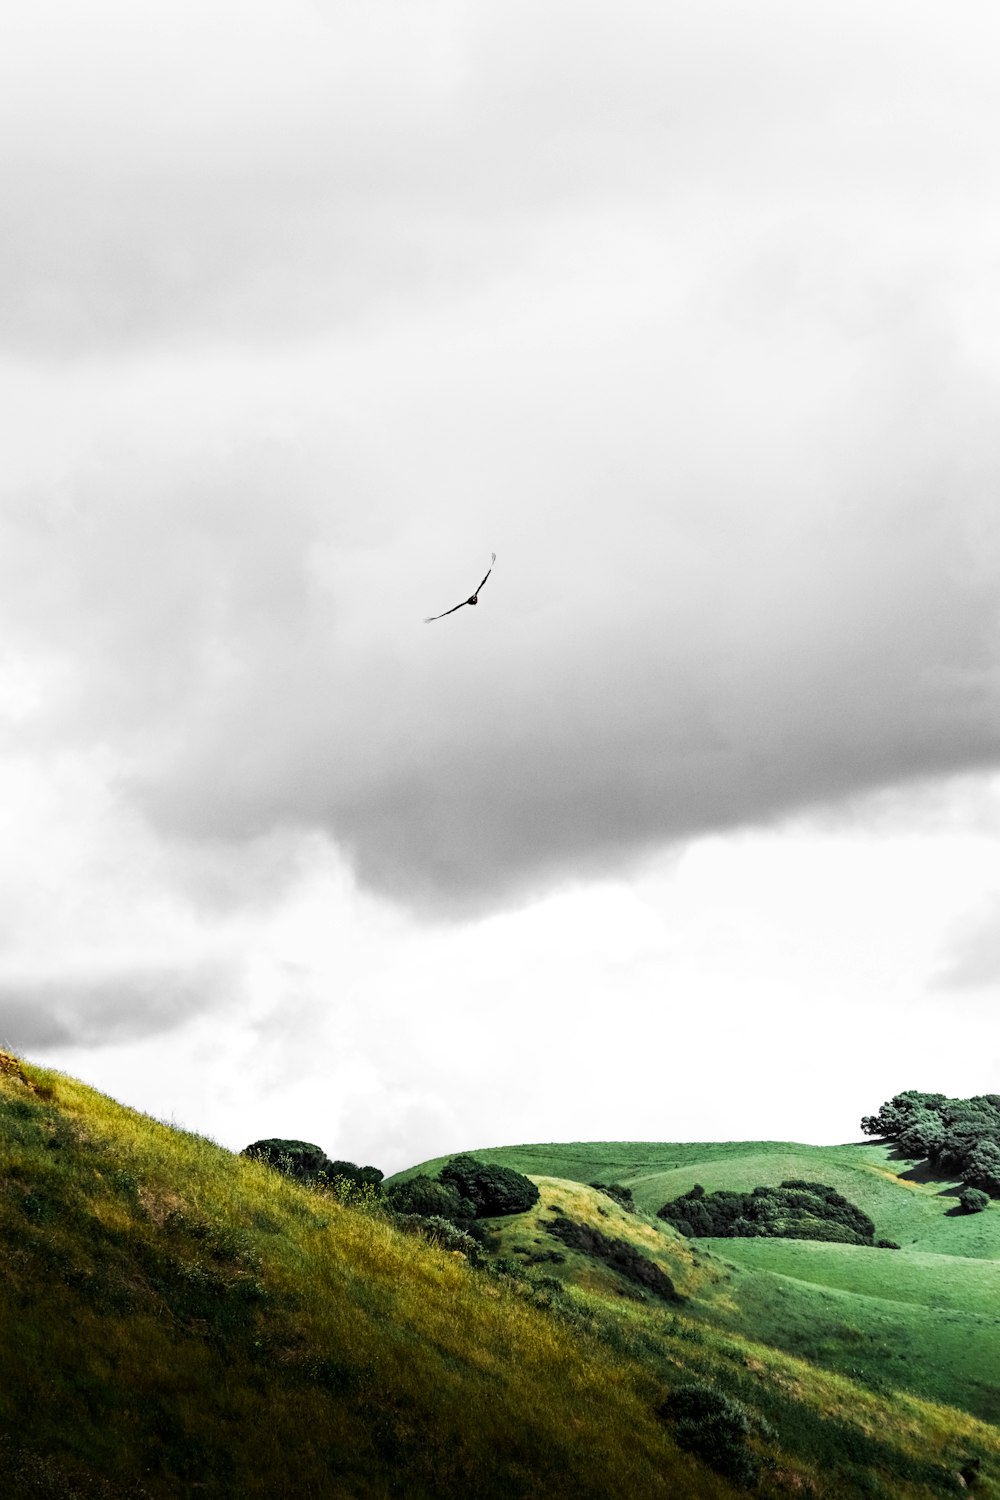 bird flying over green grass field under cloudy sky during daytime